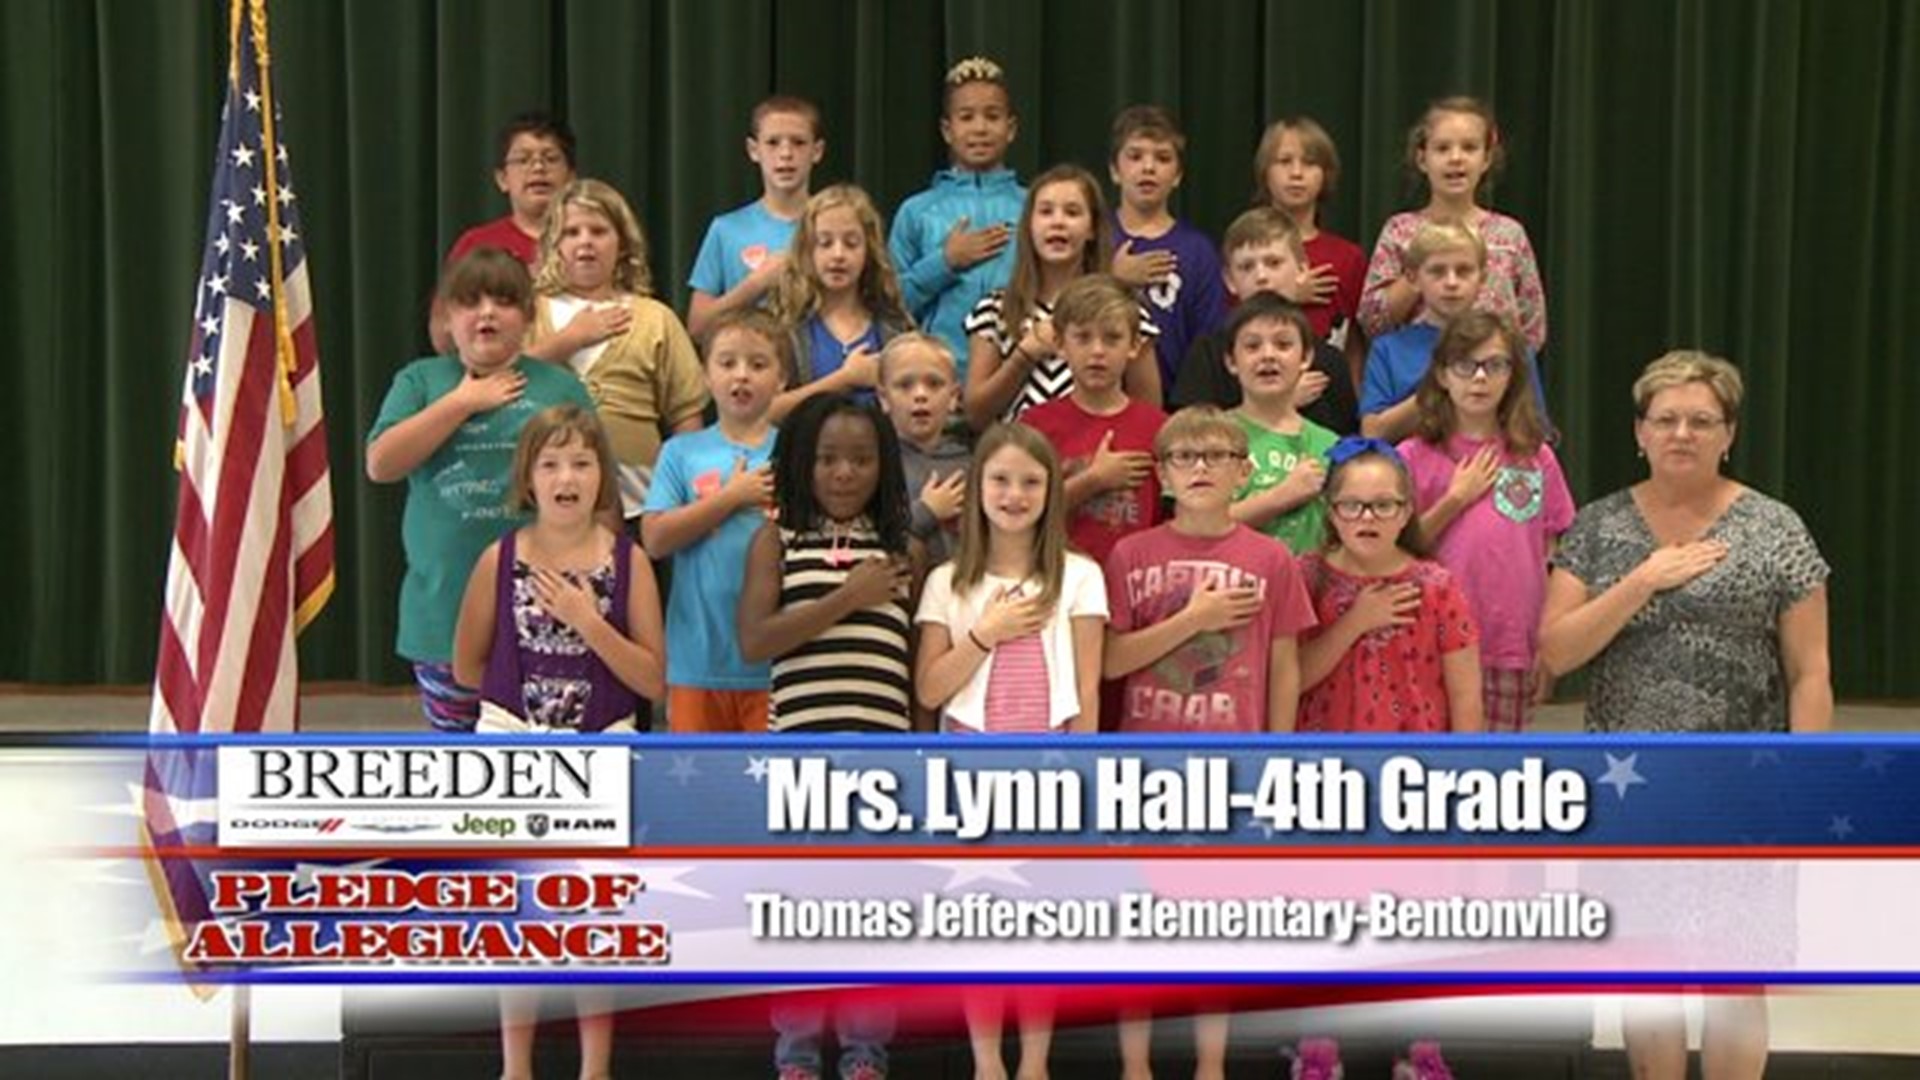 Thomas Jefferson Elementary, Bentonville - Mrs. Lynn Hall - 4th Grade